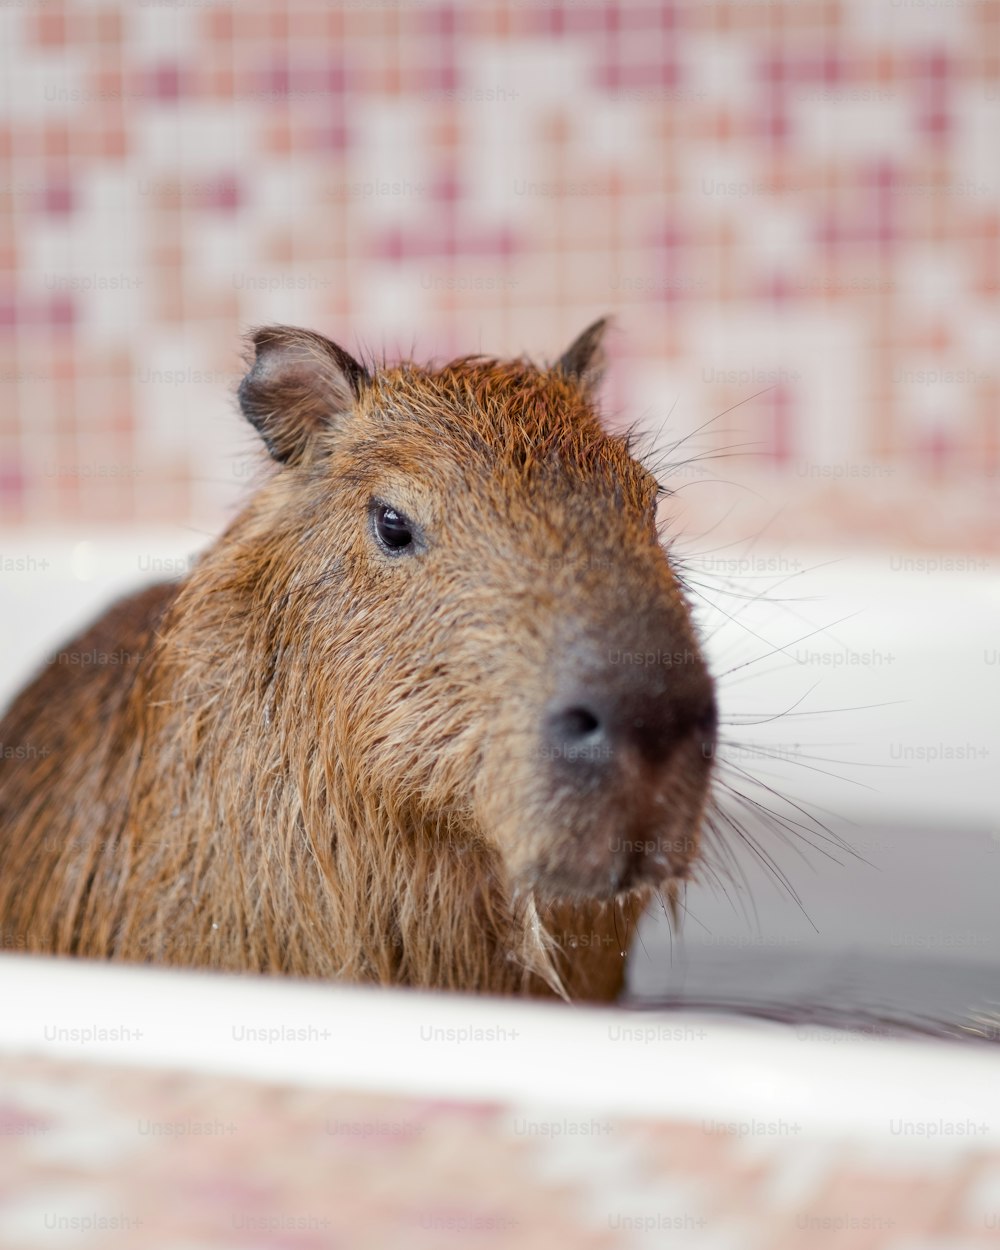 a close up of a capybara in a bathtub